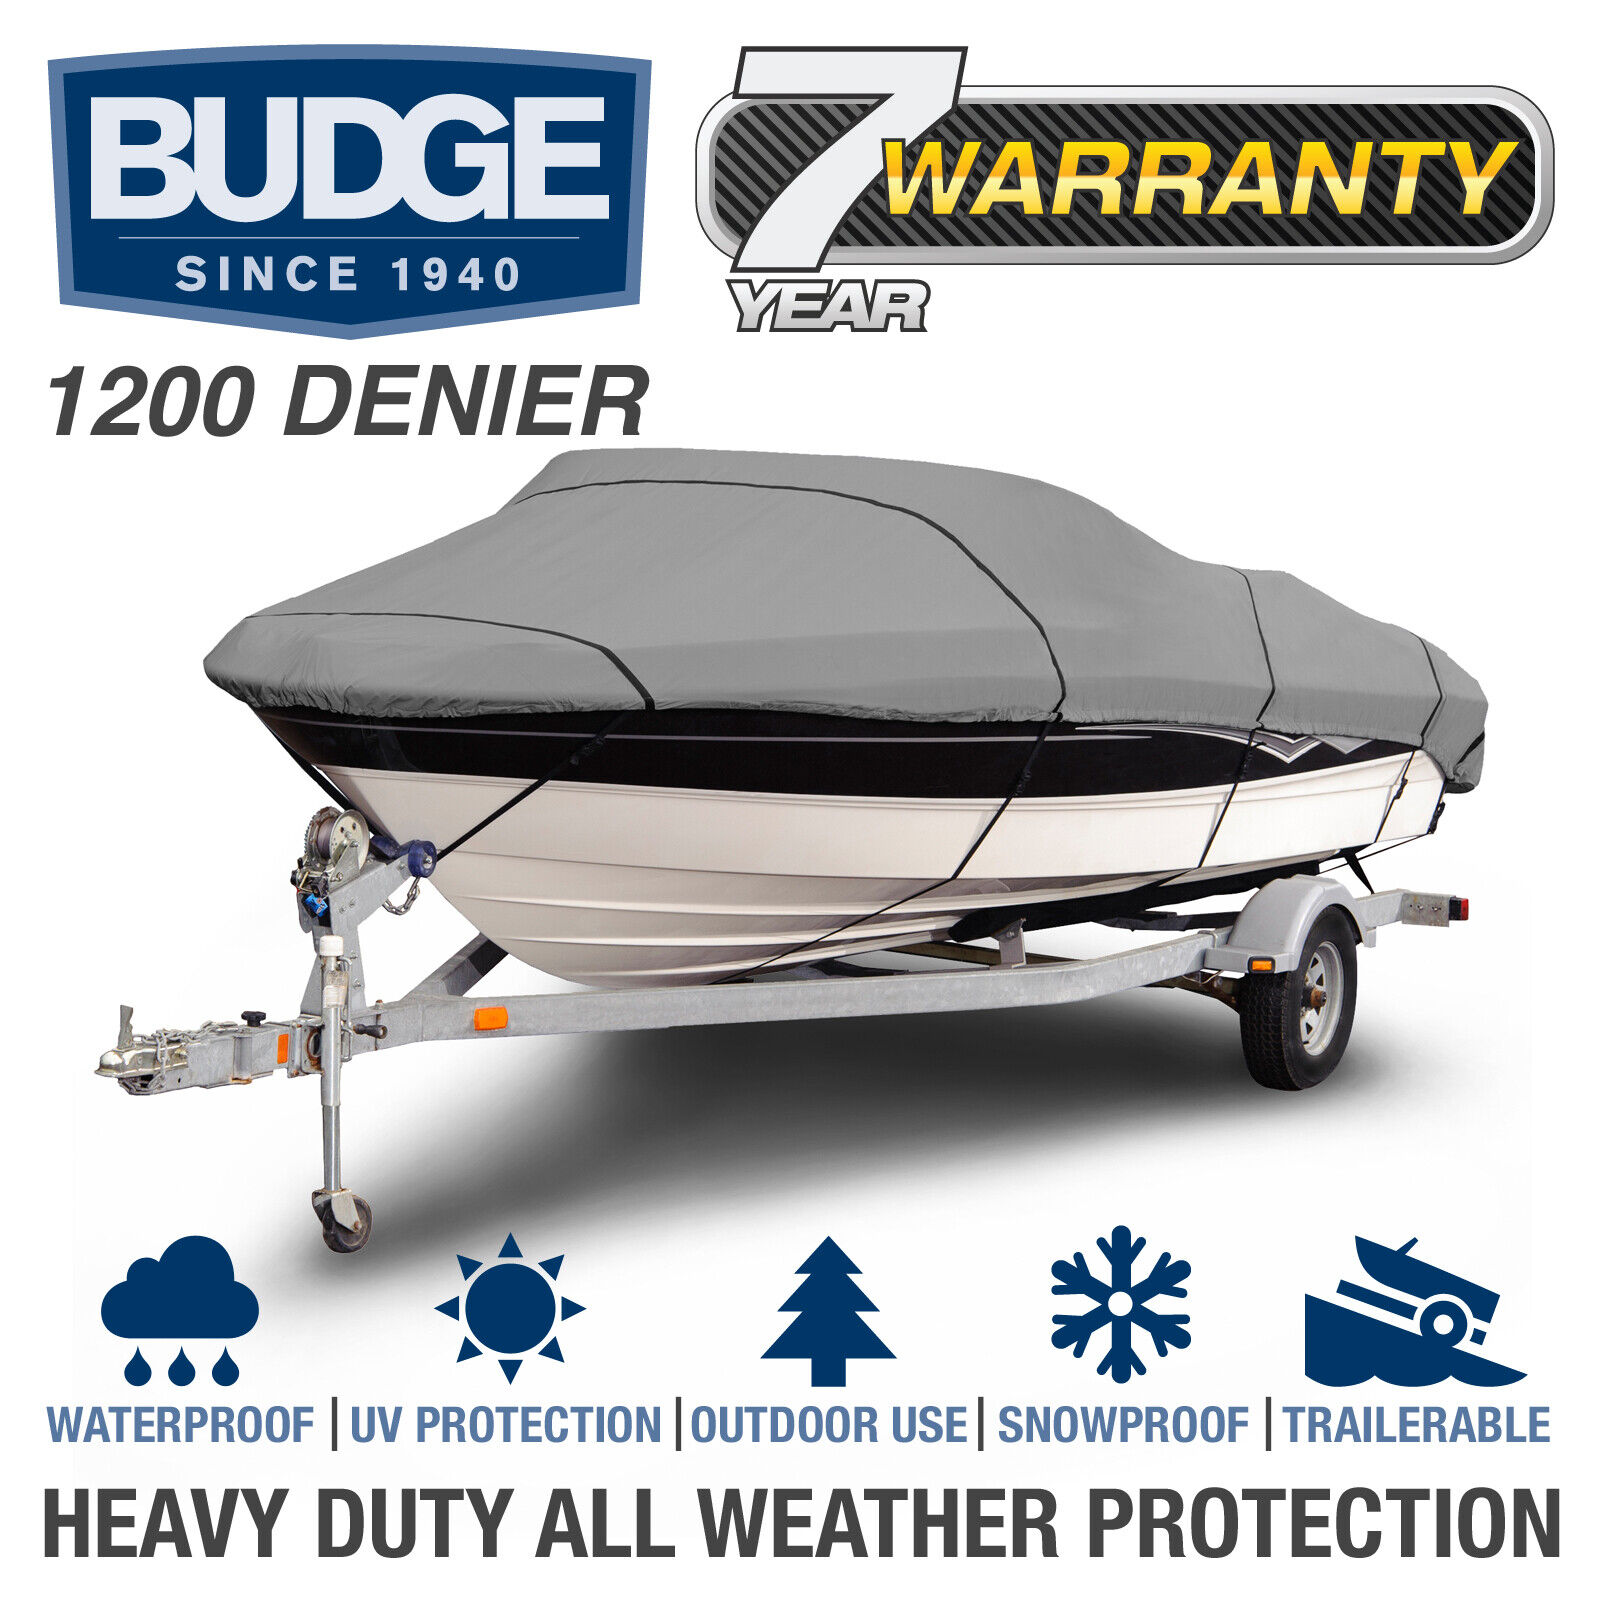 Budge 1200 Denier Waterproof Boat Cover | Fits Jumbo Hard Top Boats | 6 Sizes